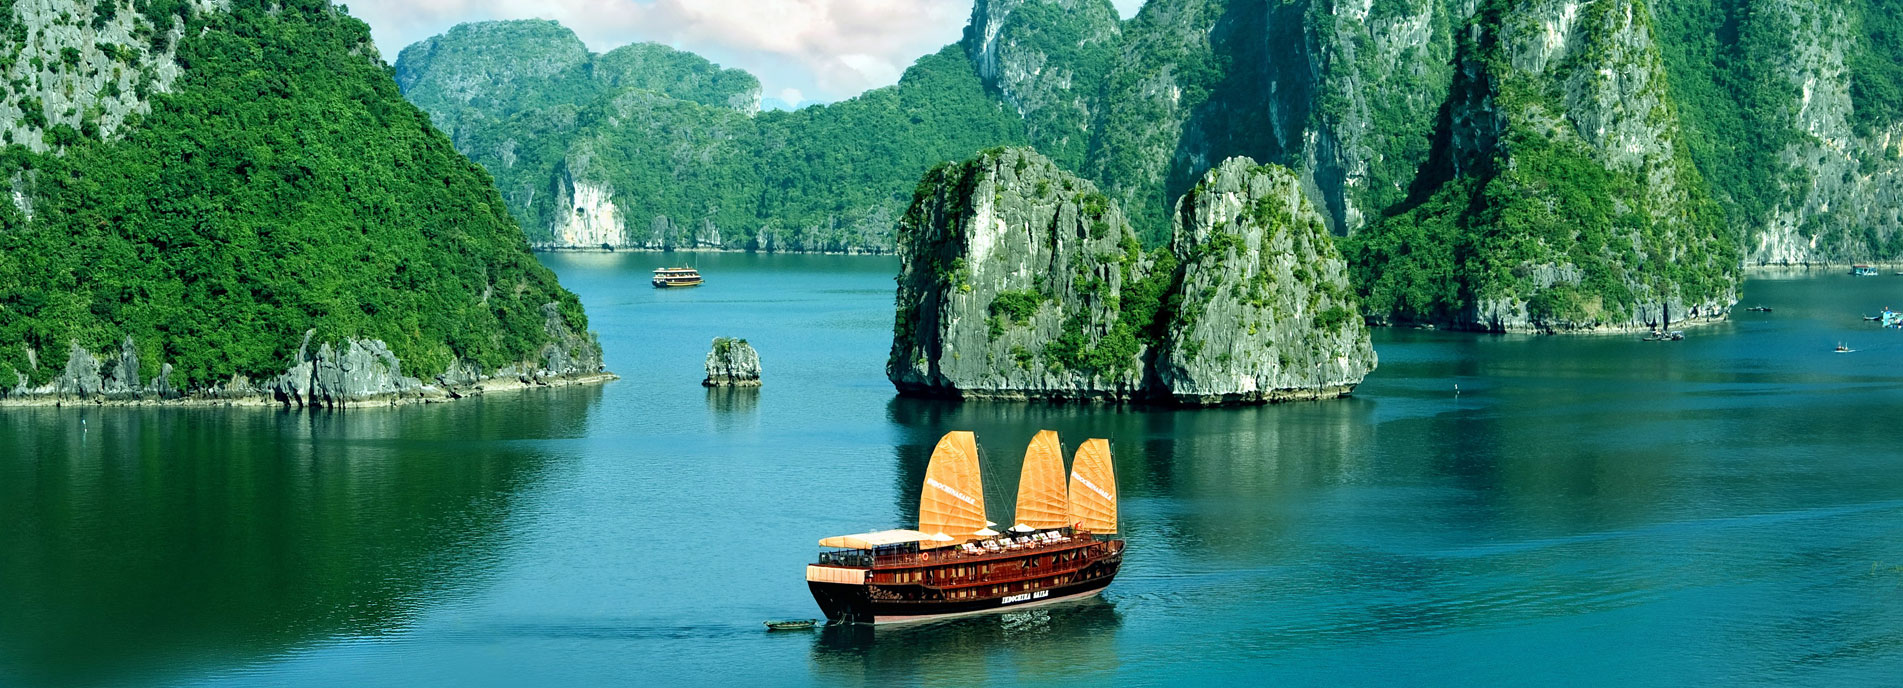 Halong Bay cruise from Hanoi